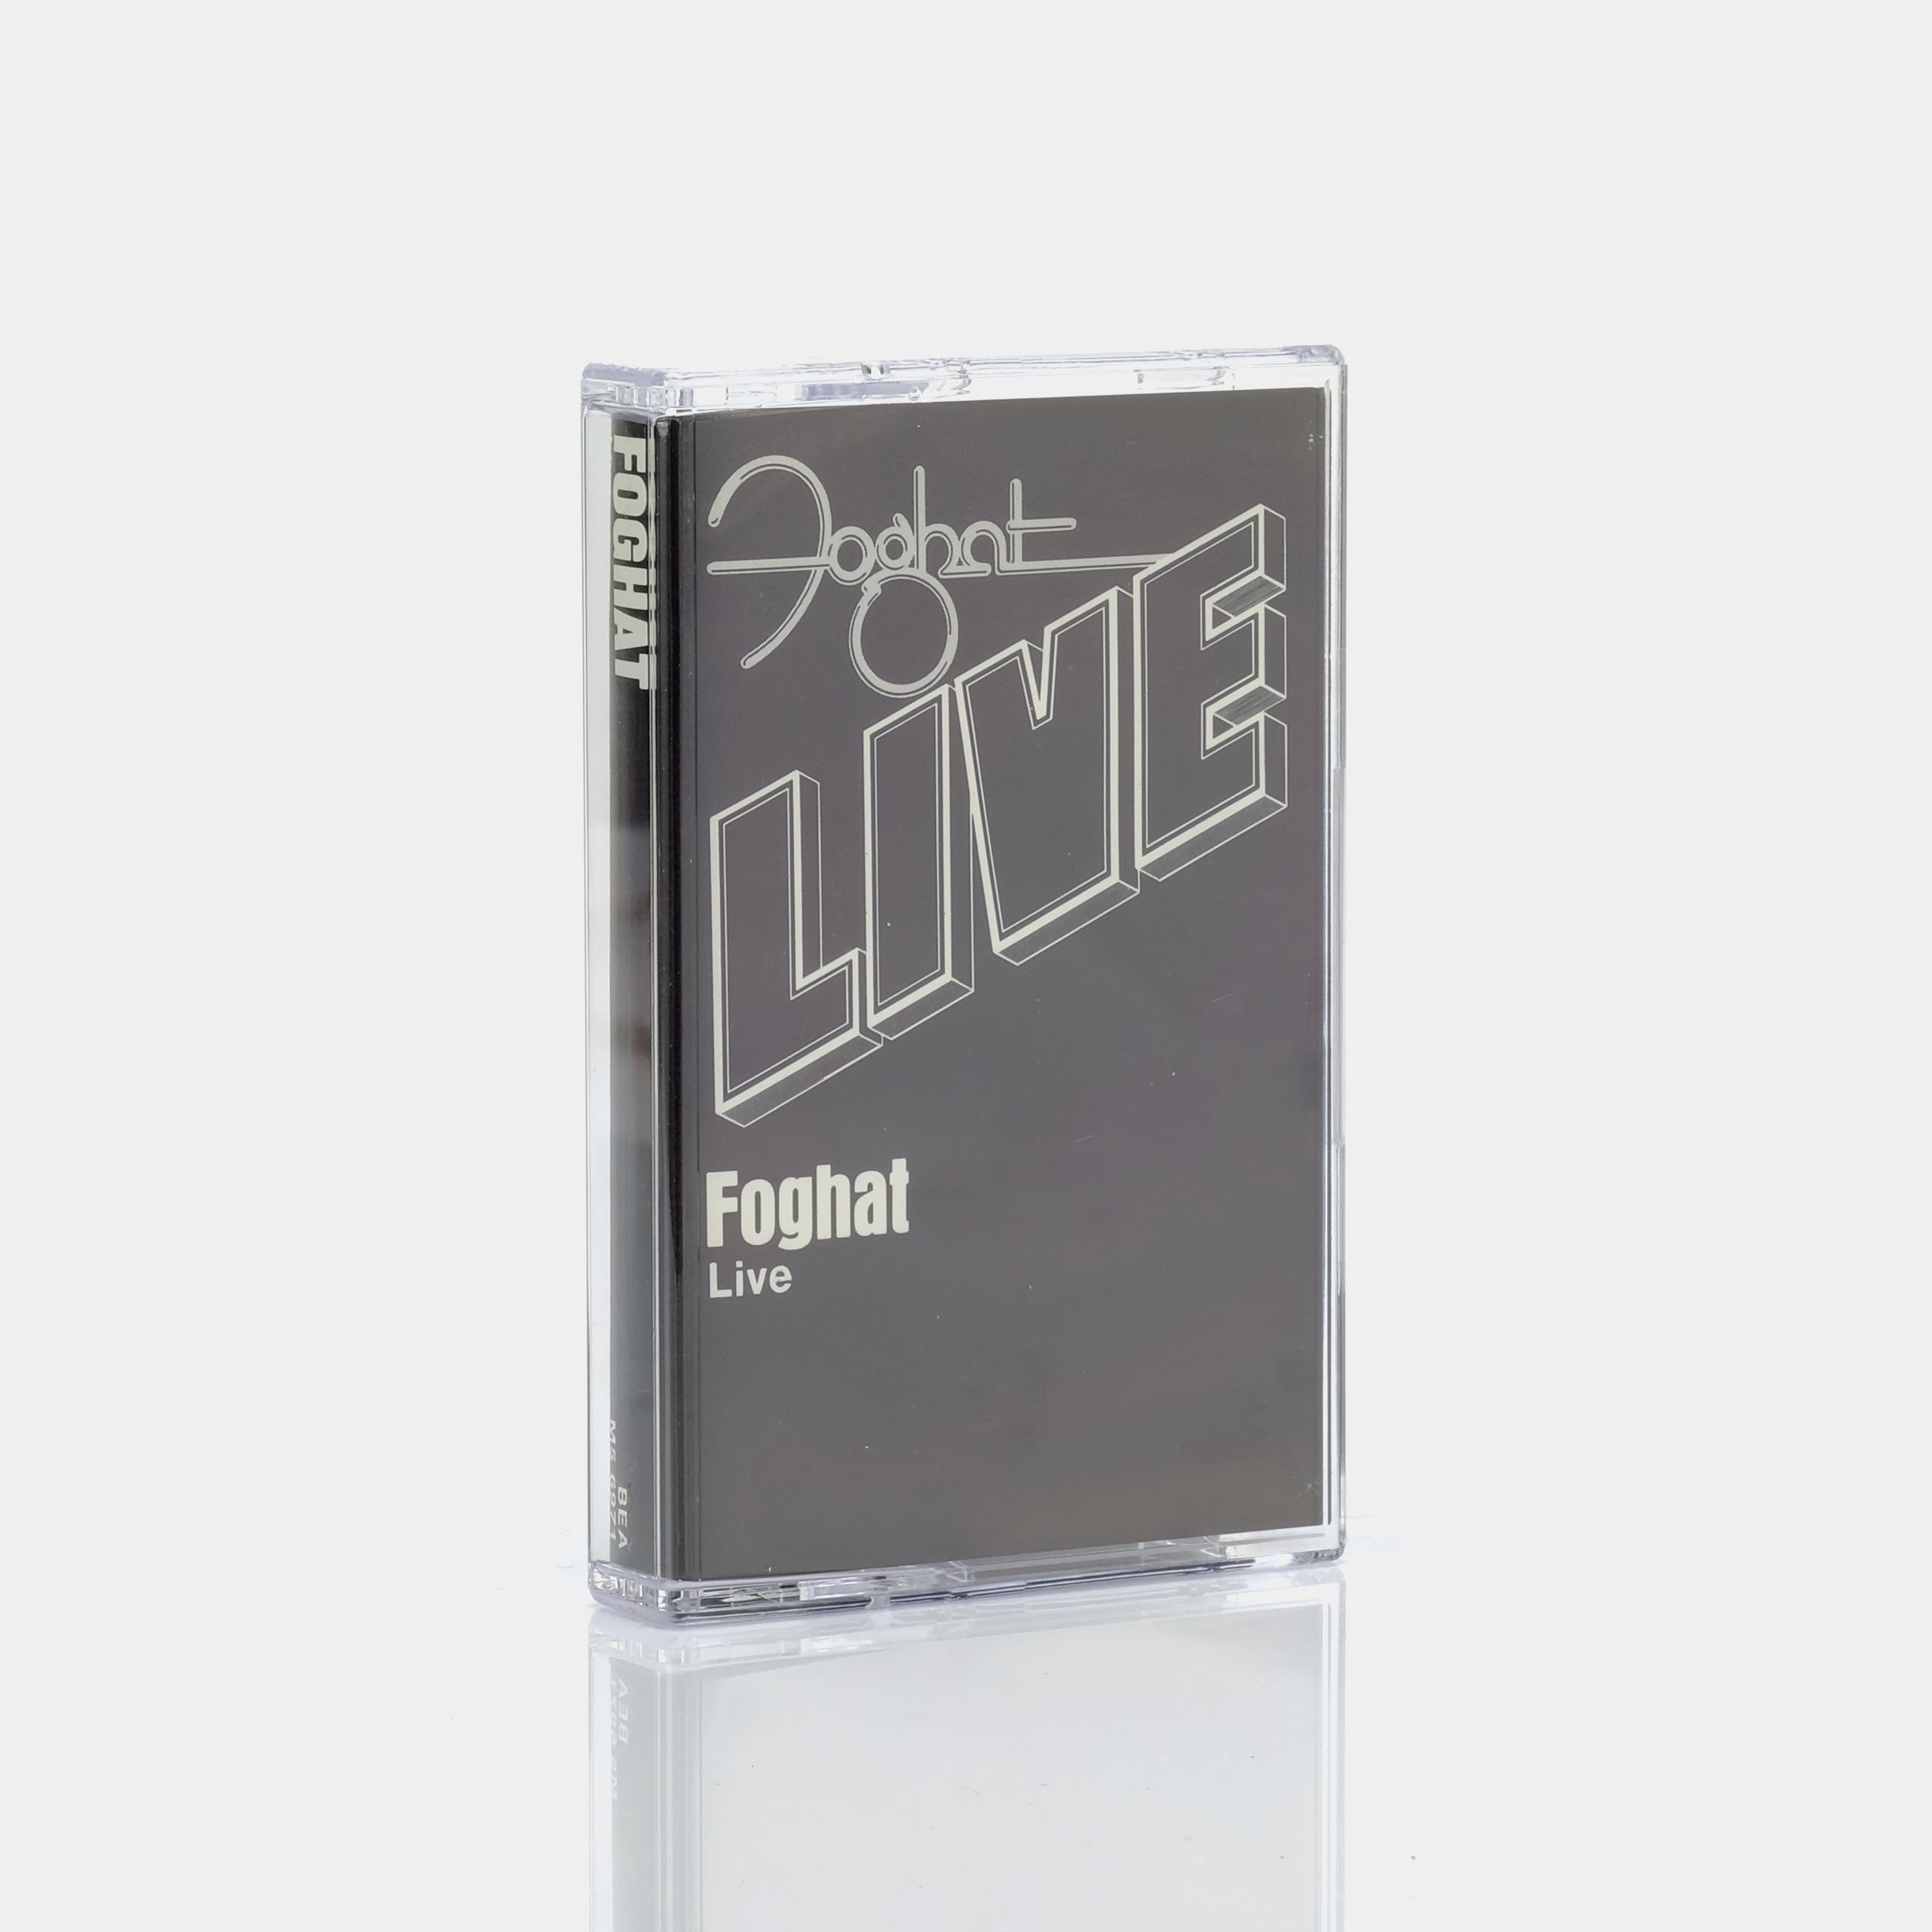 Foghat - Live Cassette Tape